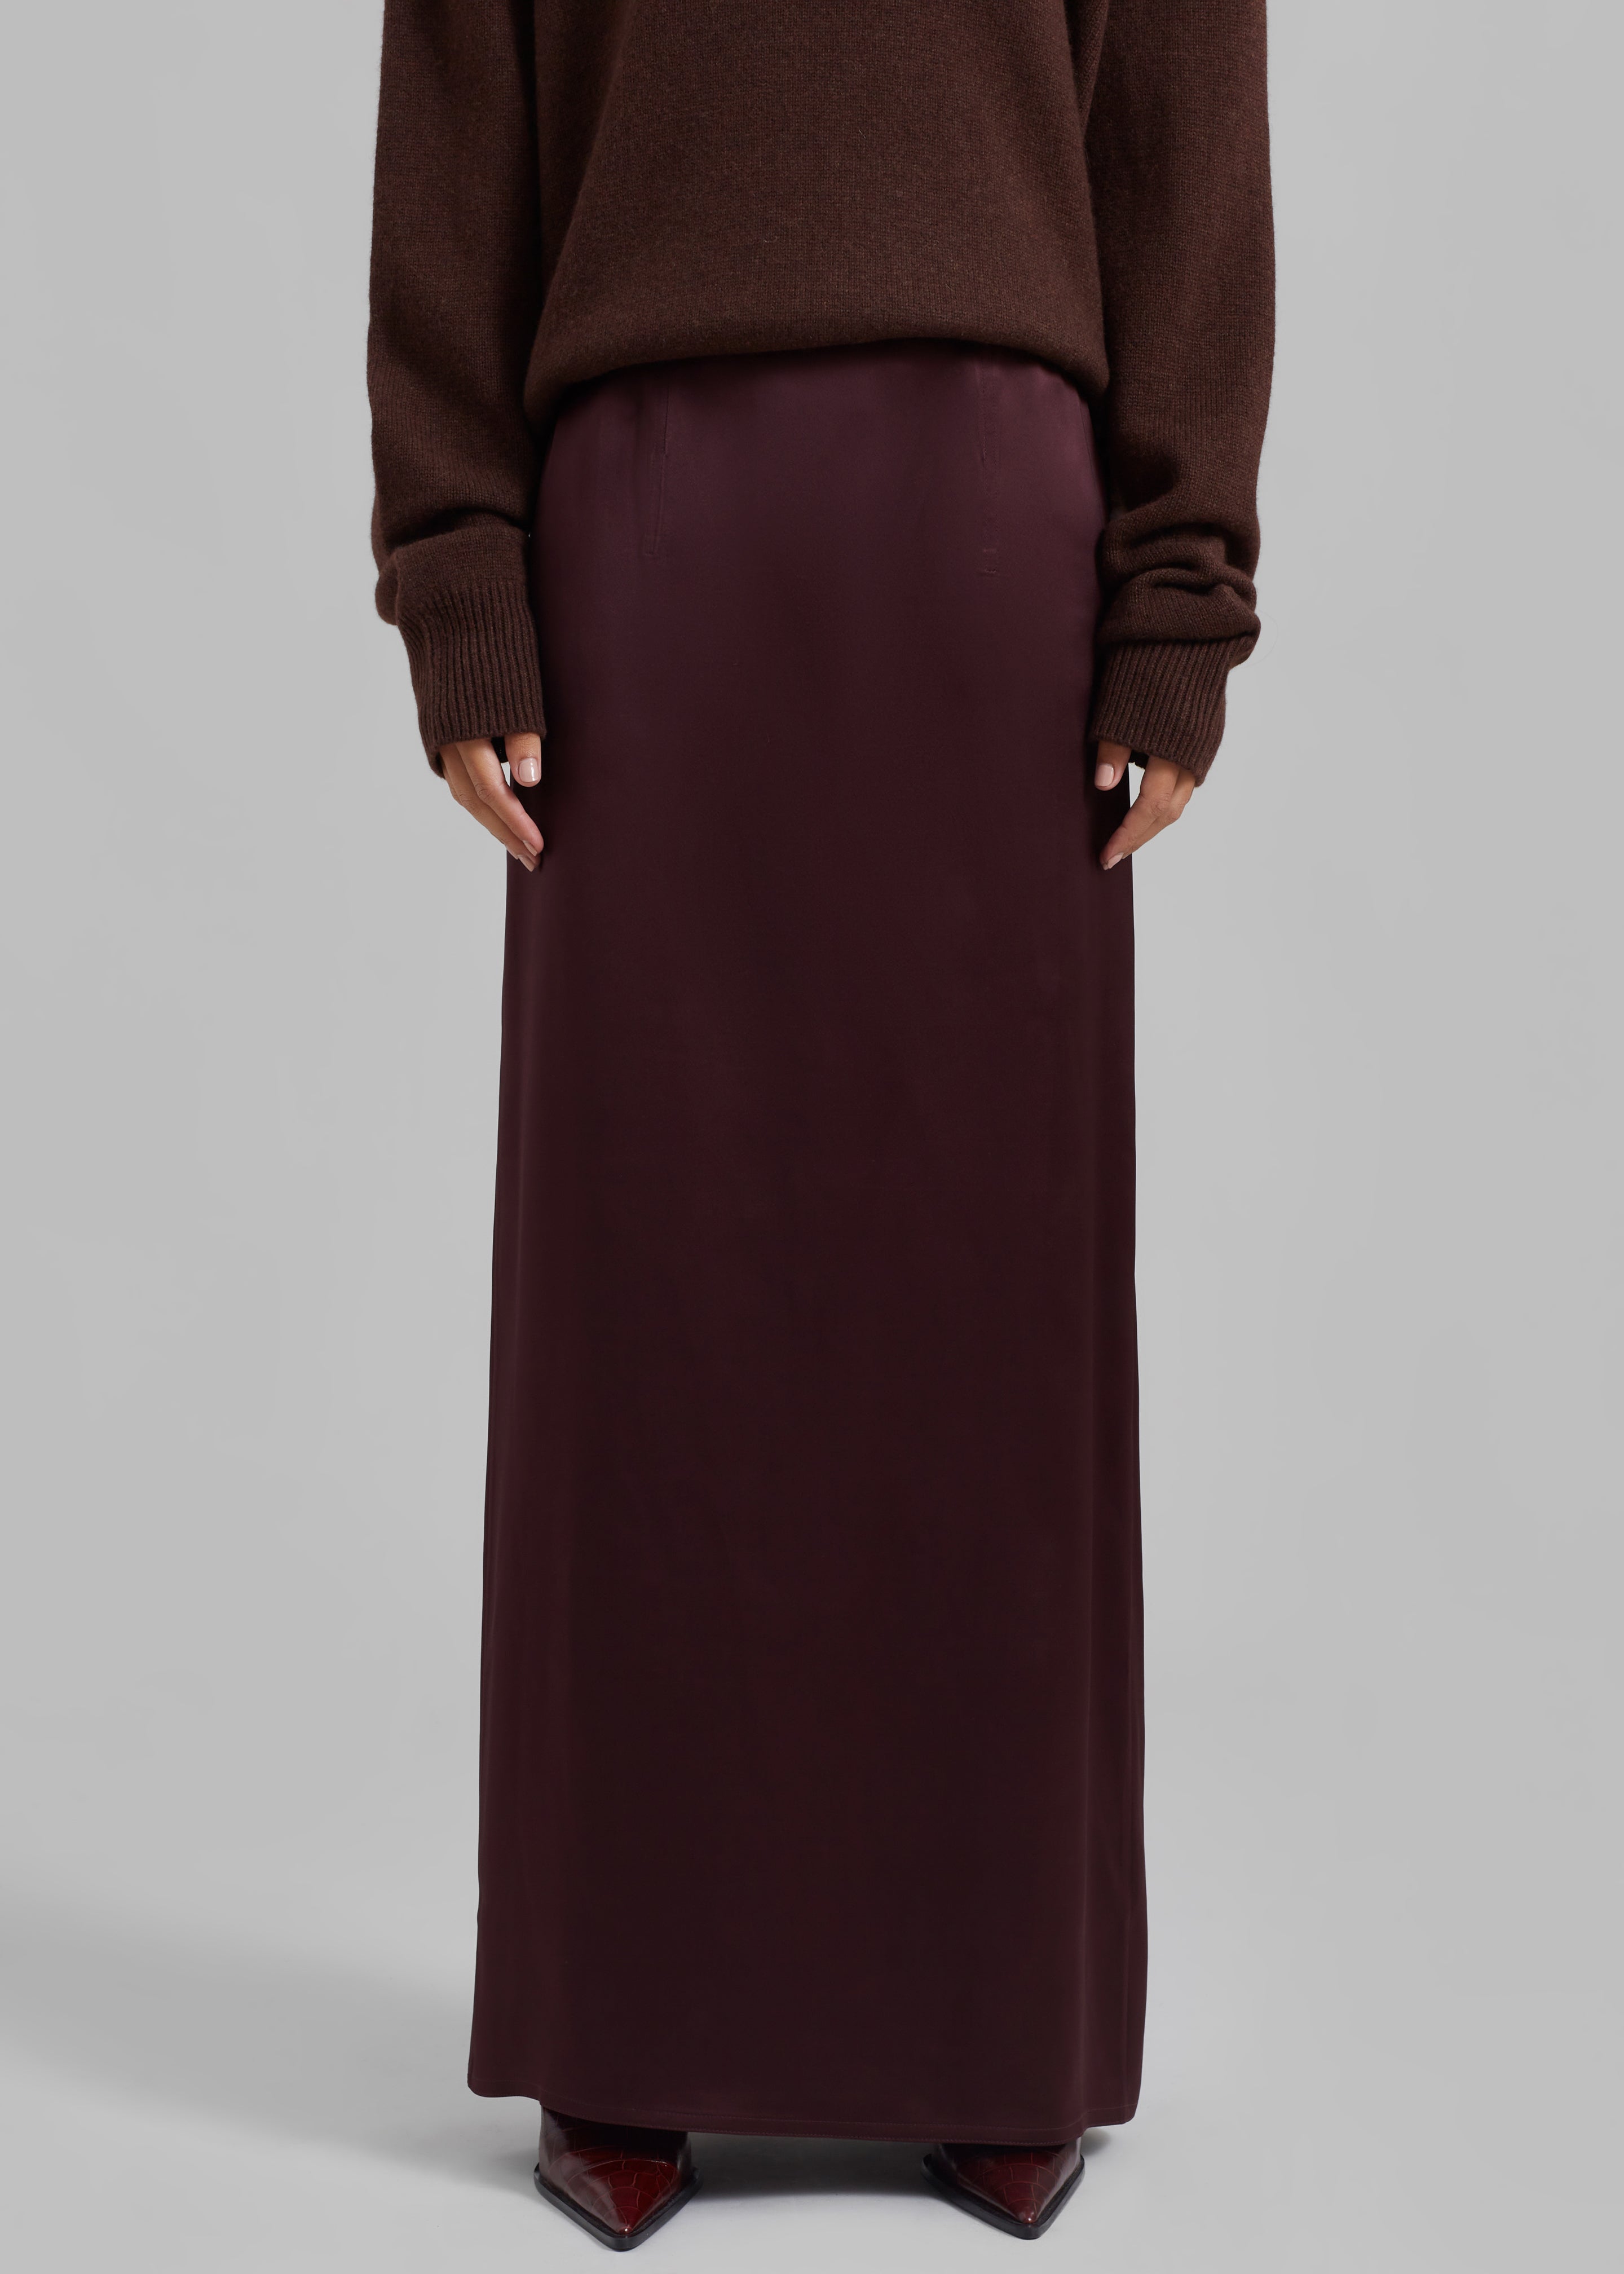 Bevza Ankle Length Skirt - Burgundy Brown - 3